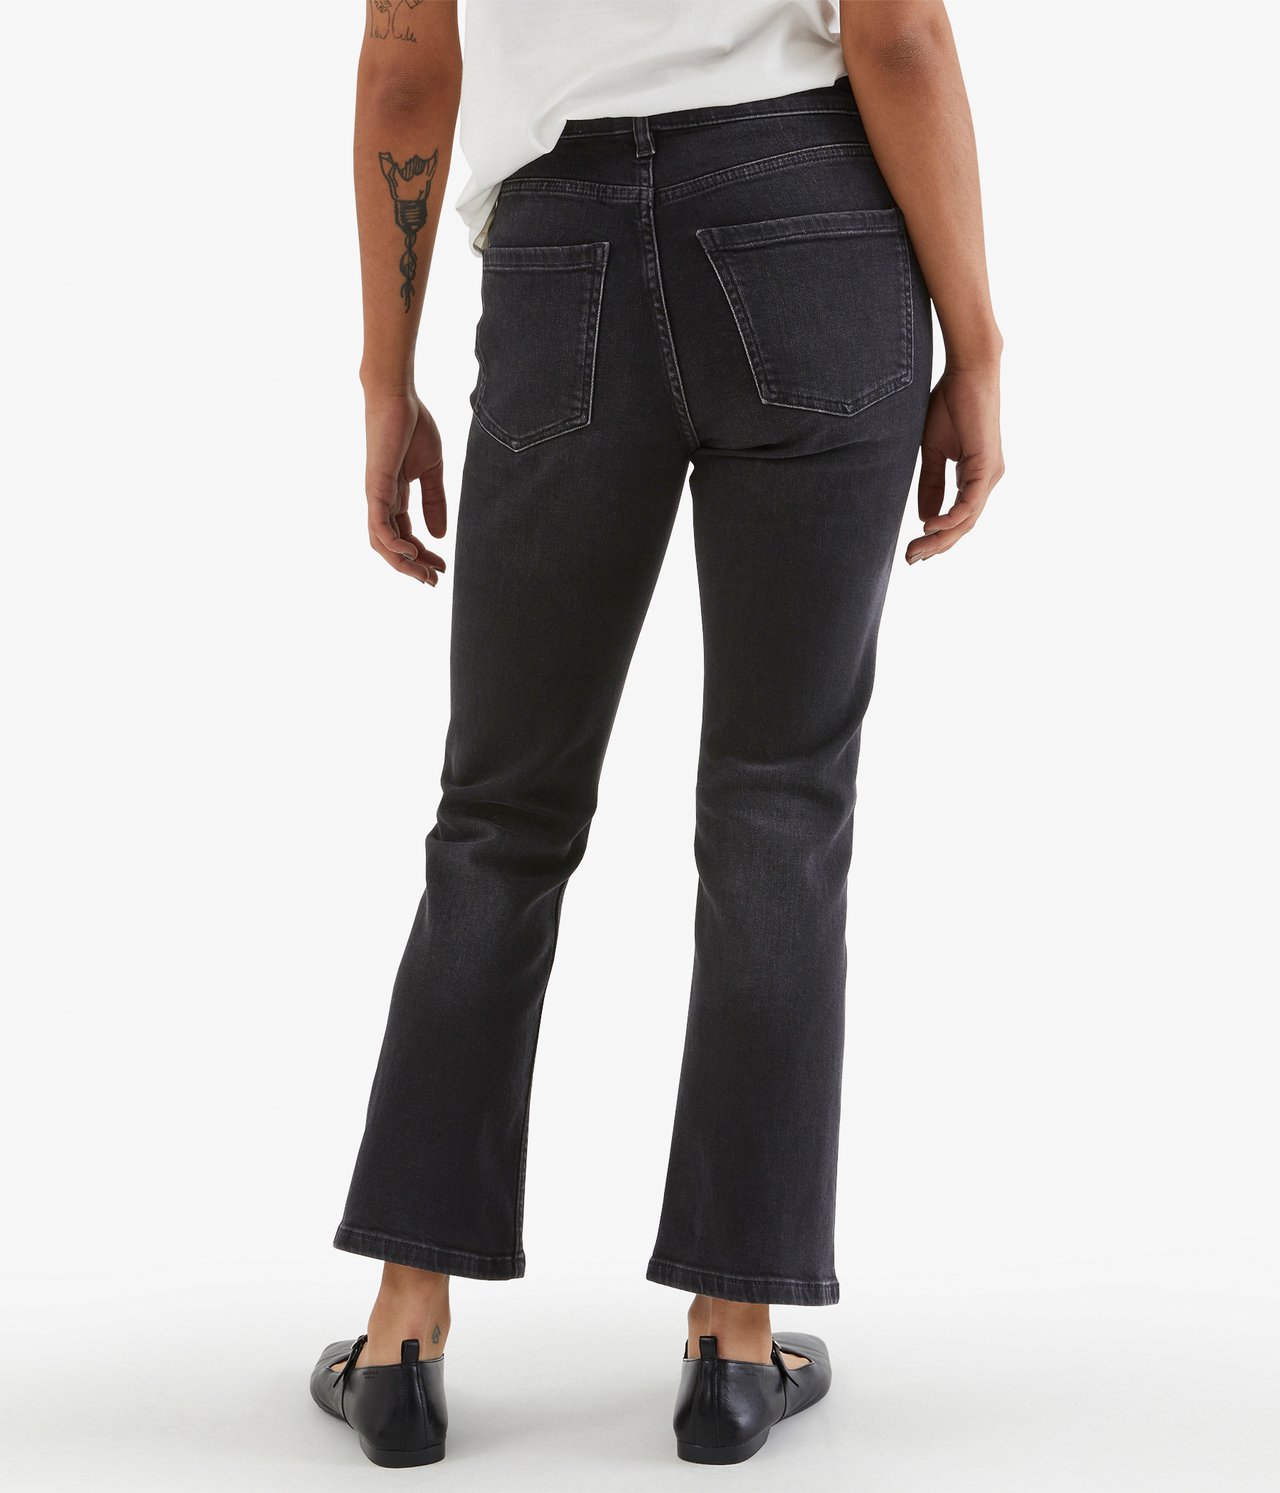 Cropped flare jeans regular waist - Pesty musta denimi - 4